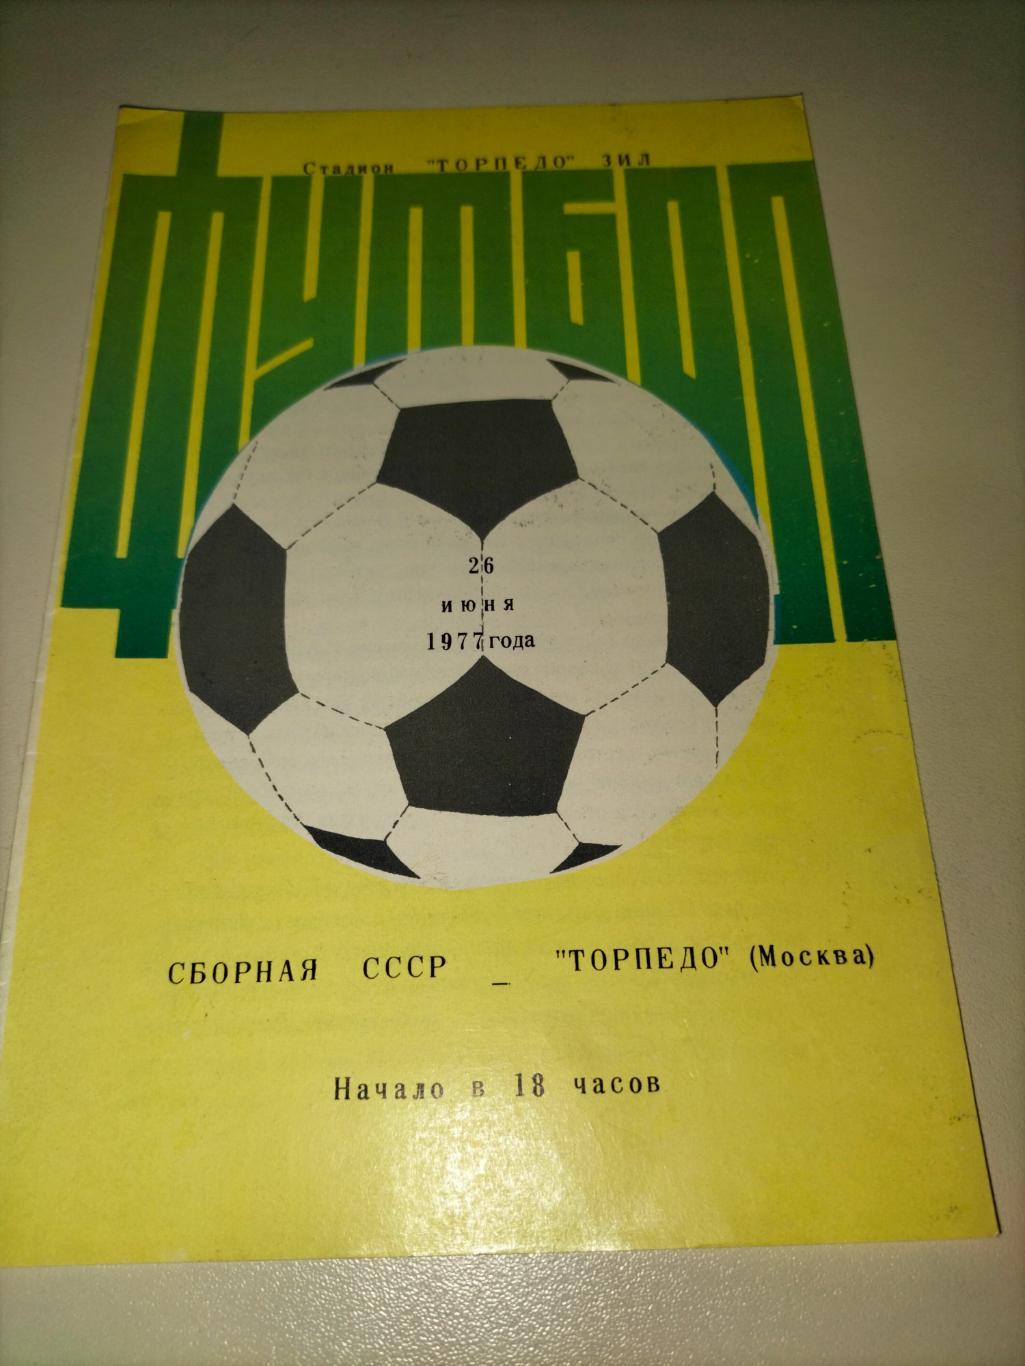 Сборная СССР - Торпедо Москва 1977 2